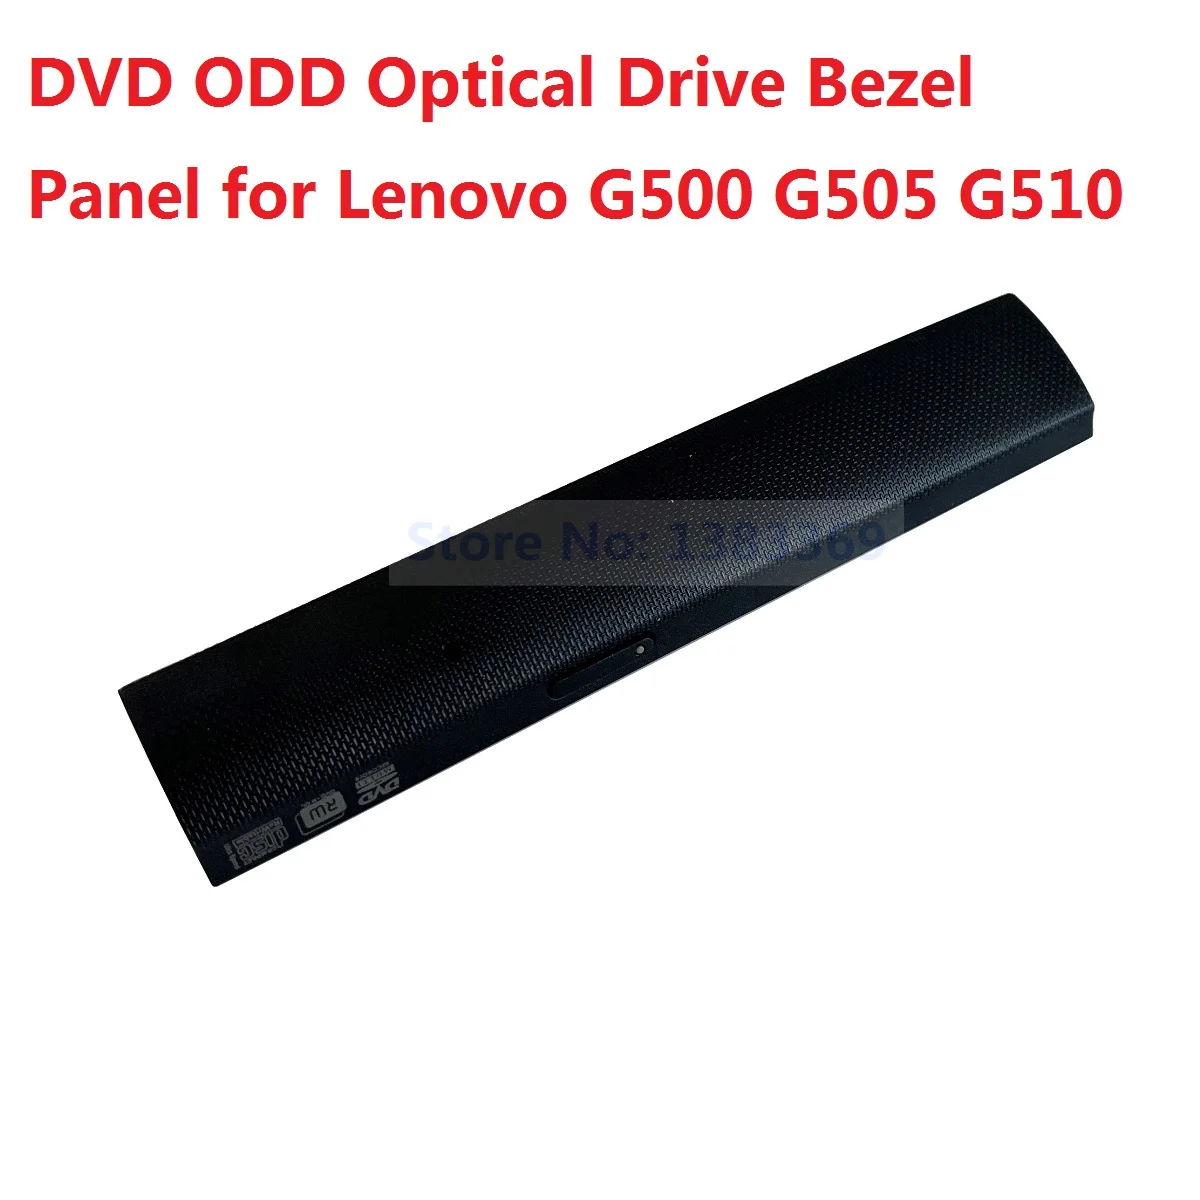 DVD-RW, DVD מוזר CD הכונן האופטי הקאדילק לוח הדלת בלוחית לוח הבקרה כיסוי פנל קדמי לבלבל סוגר עבור Lenovo G500 G505 G510 - 0